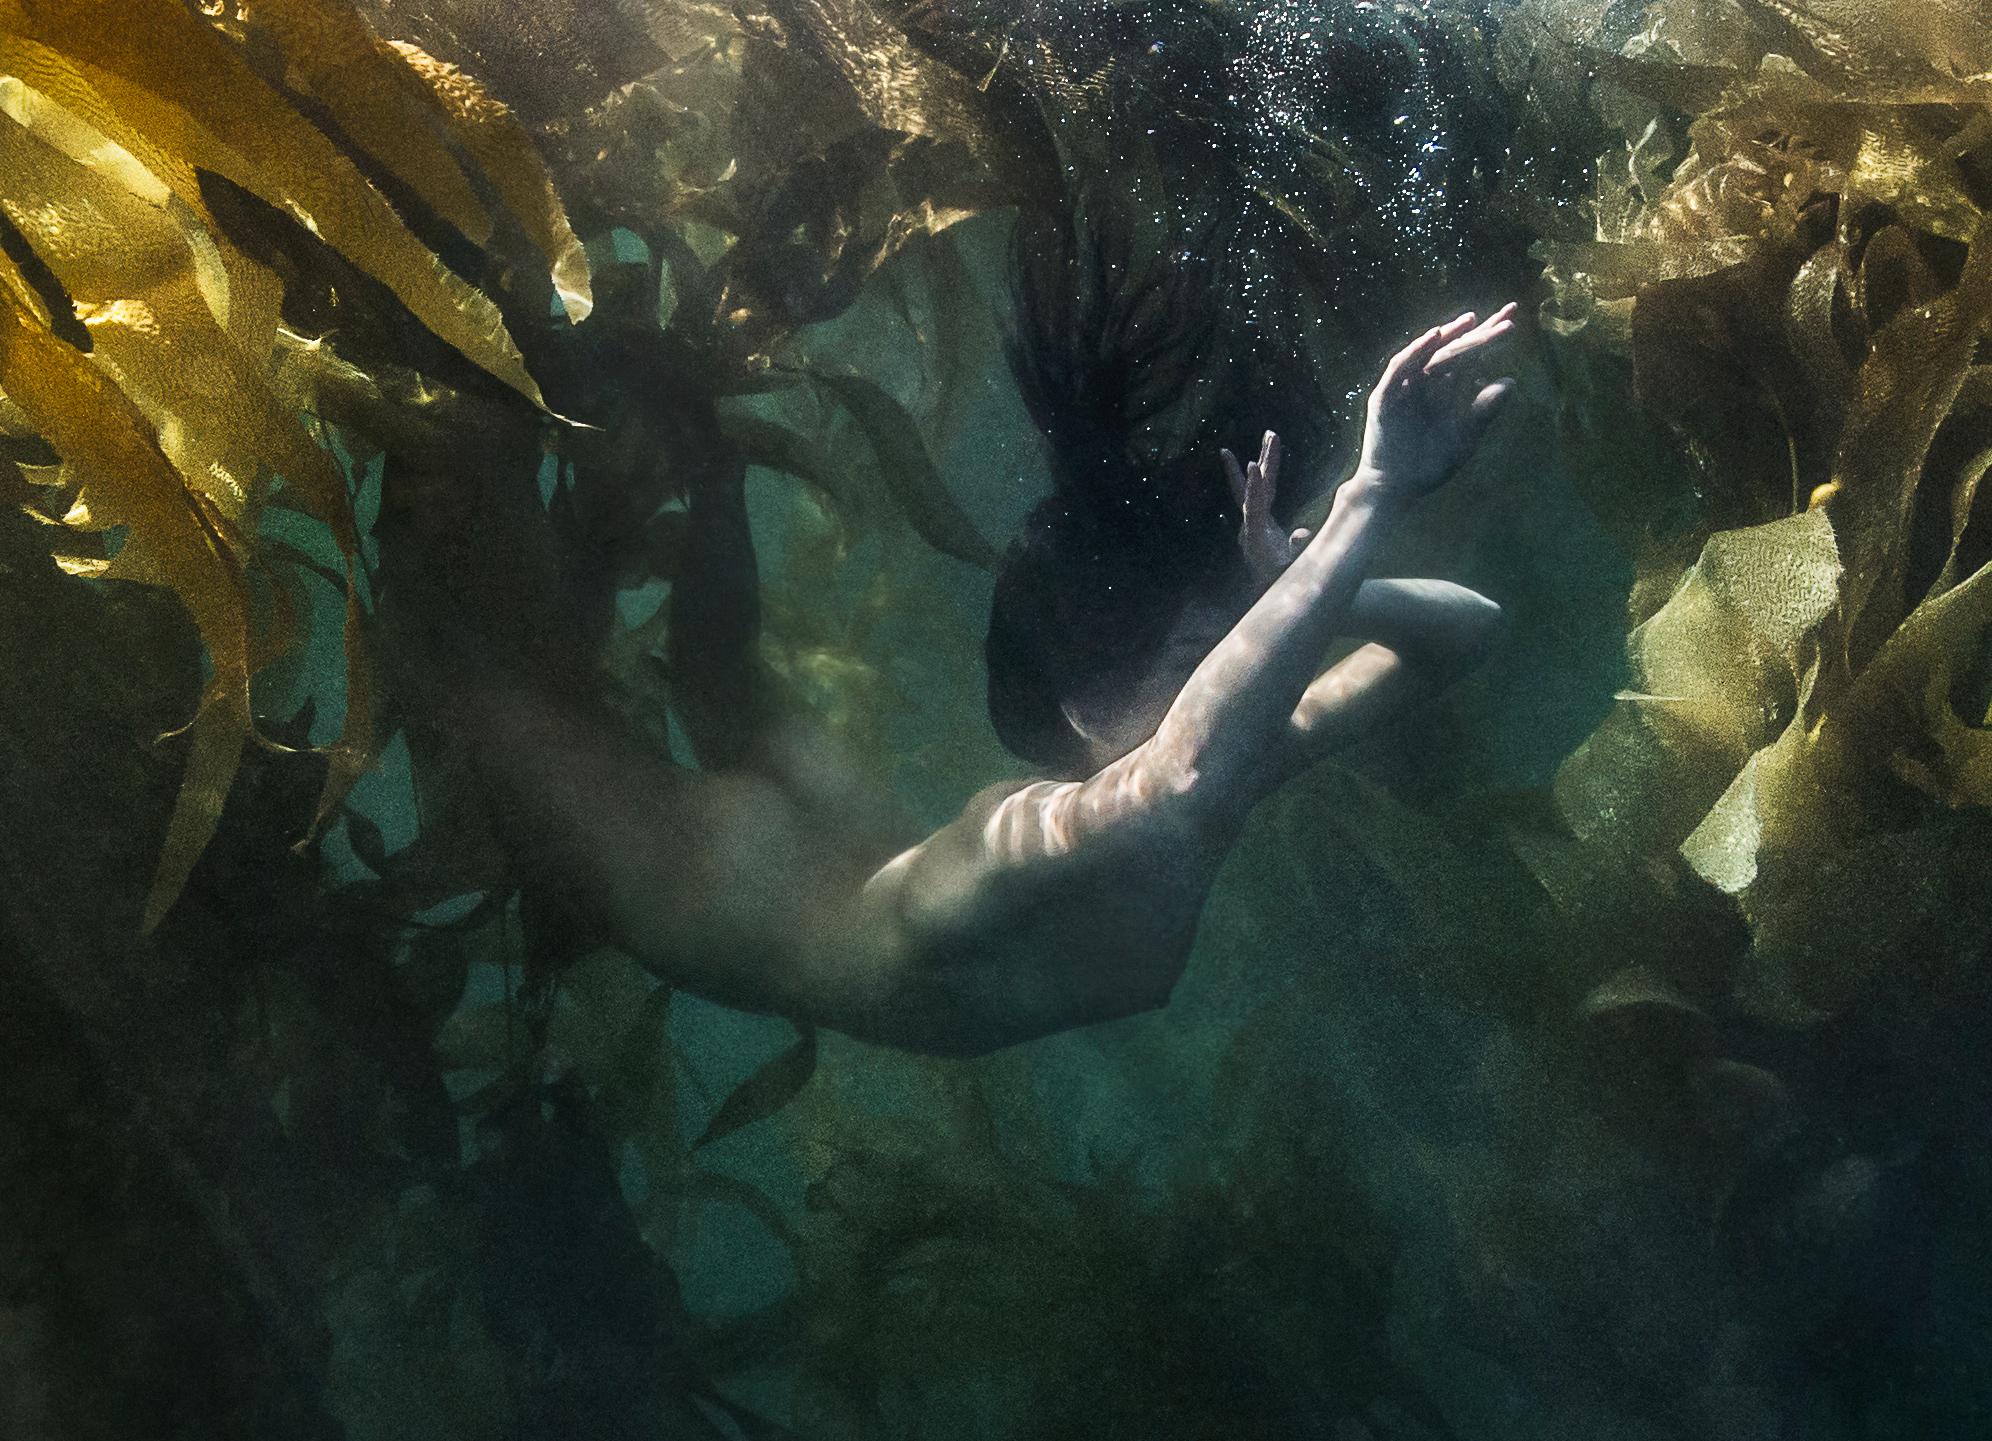 Jungle Mermaid - underwater ocean nude photograph - archival pigment 16x24